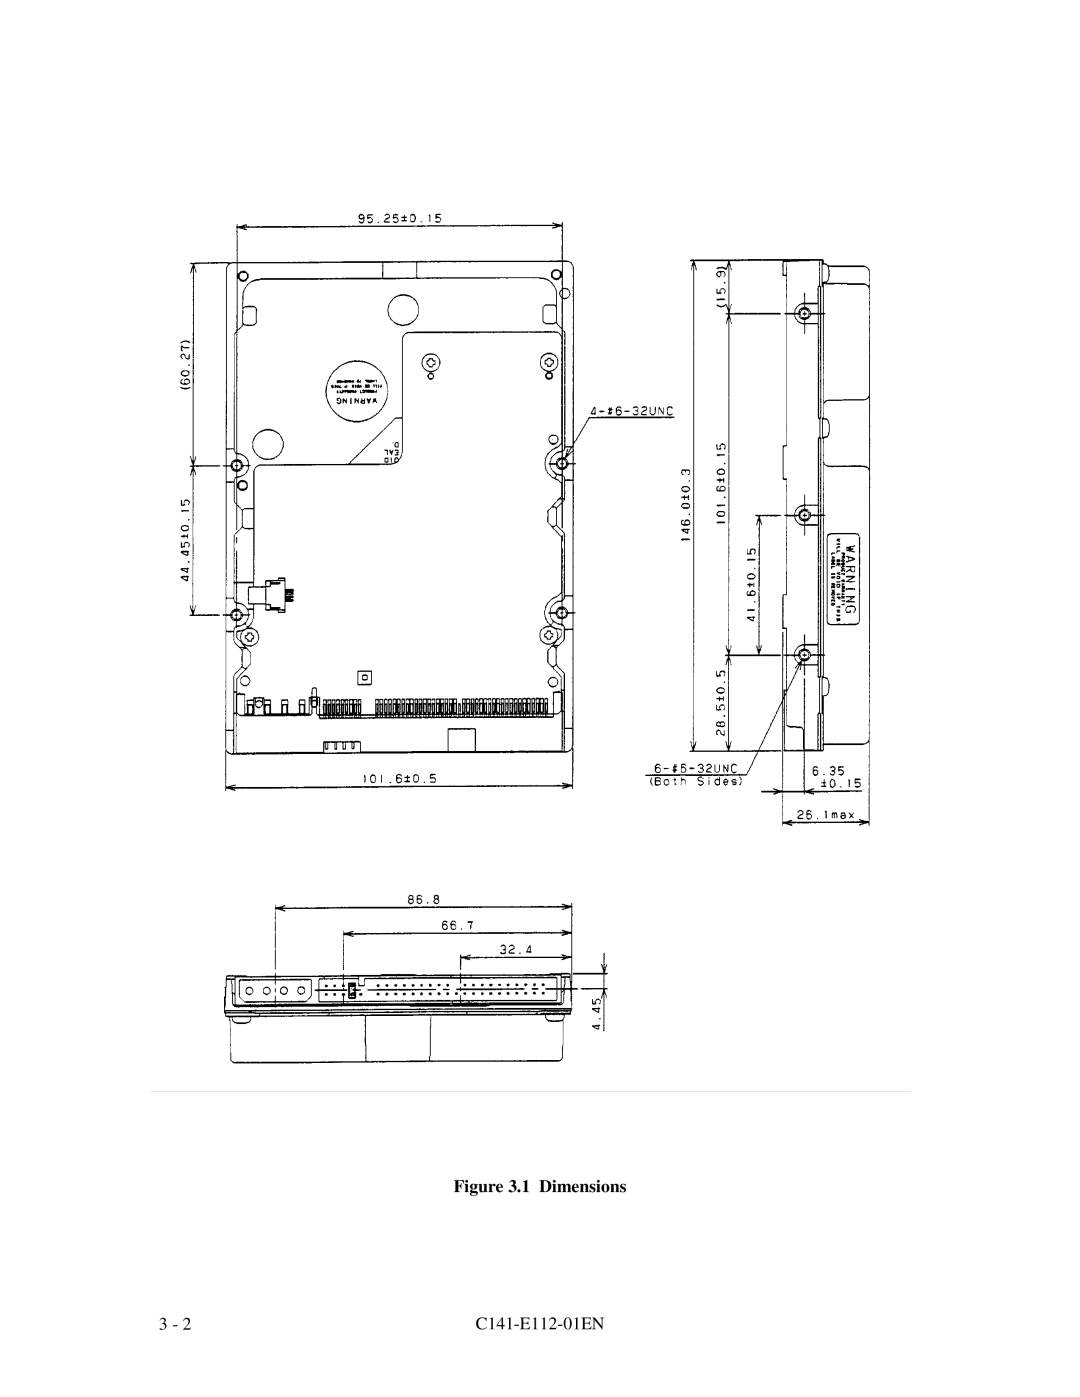 Fujitsu MPG3XXXAH manual 1 Dimensions, C141-E112-01EN 